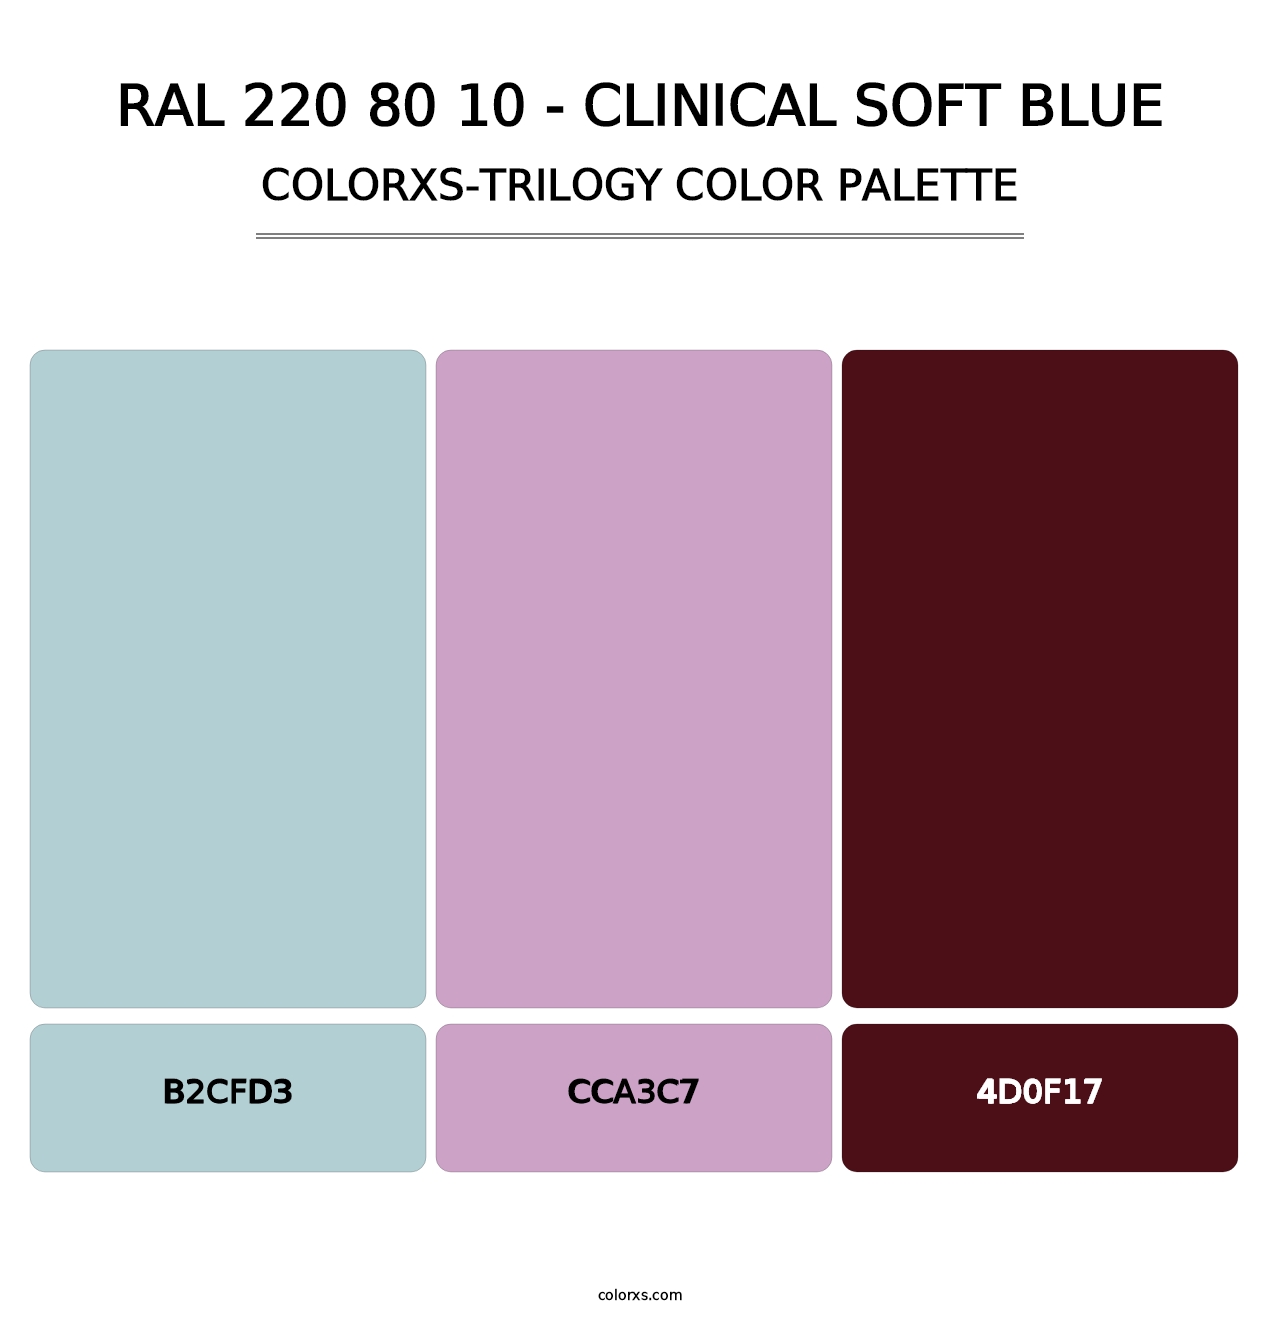 RAL 220 80 10 - Clinical Soft Blue - Colorxs Trilogy Palette